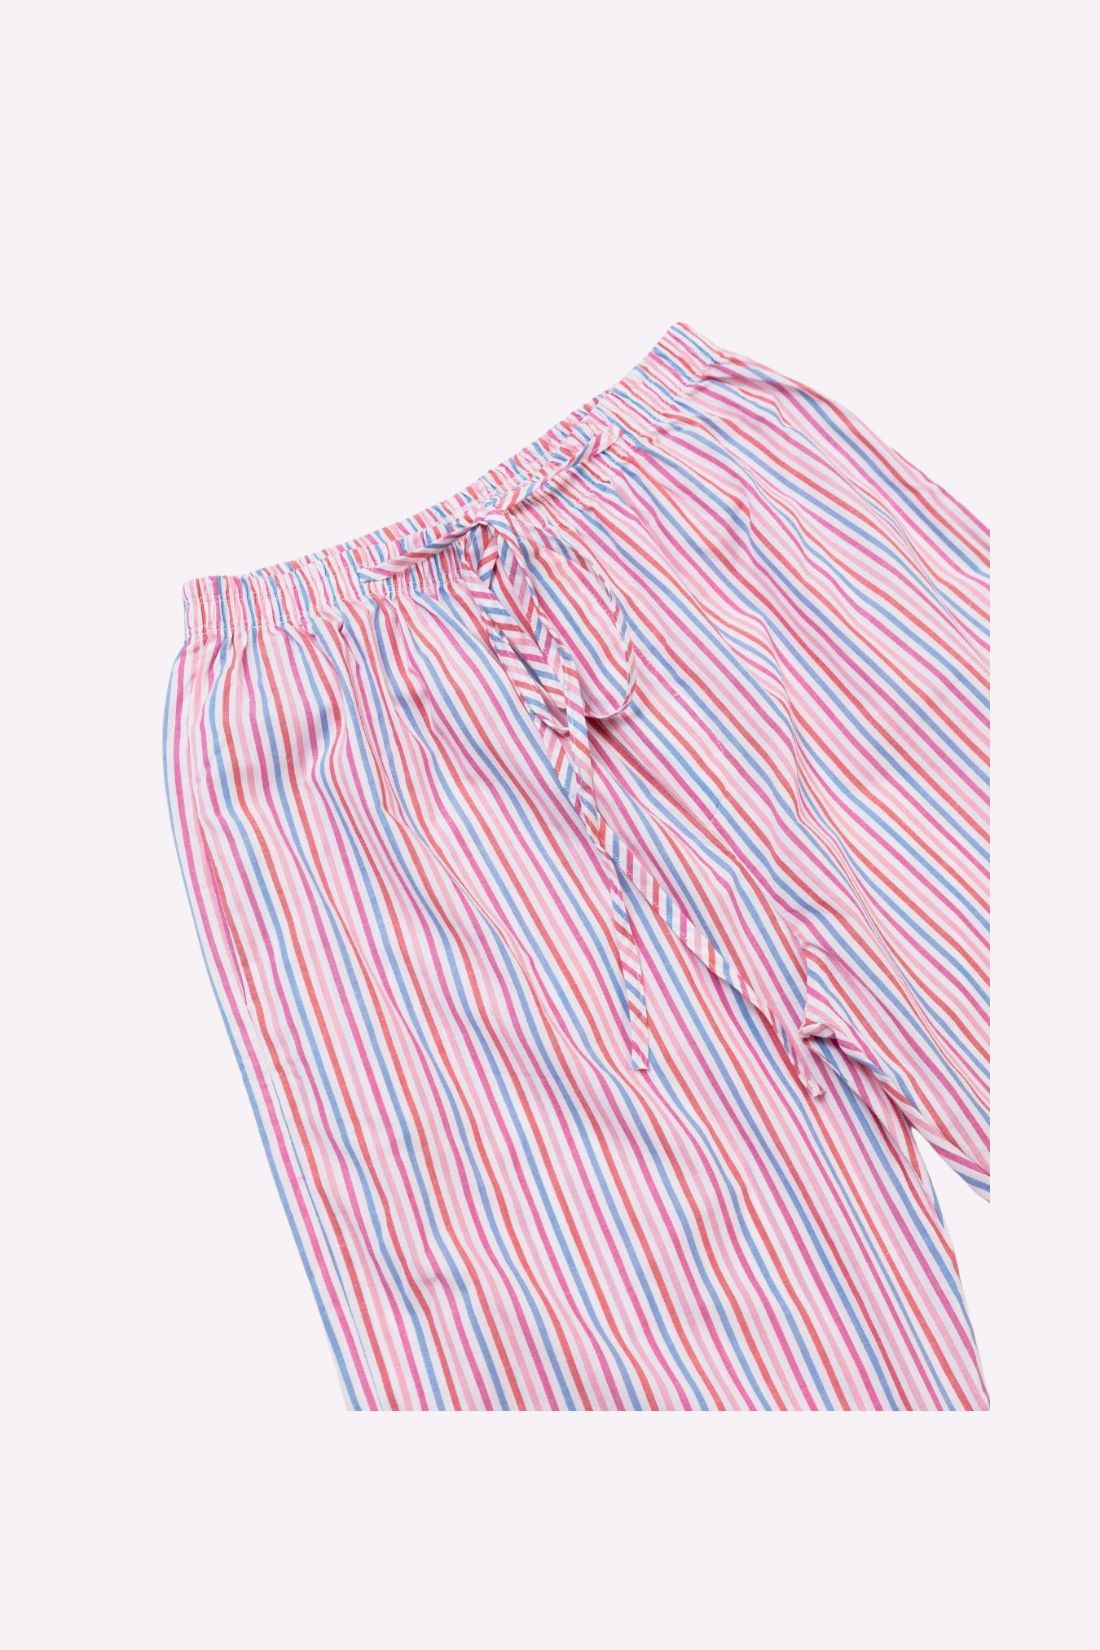 Striped Pajama Set for Dad